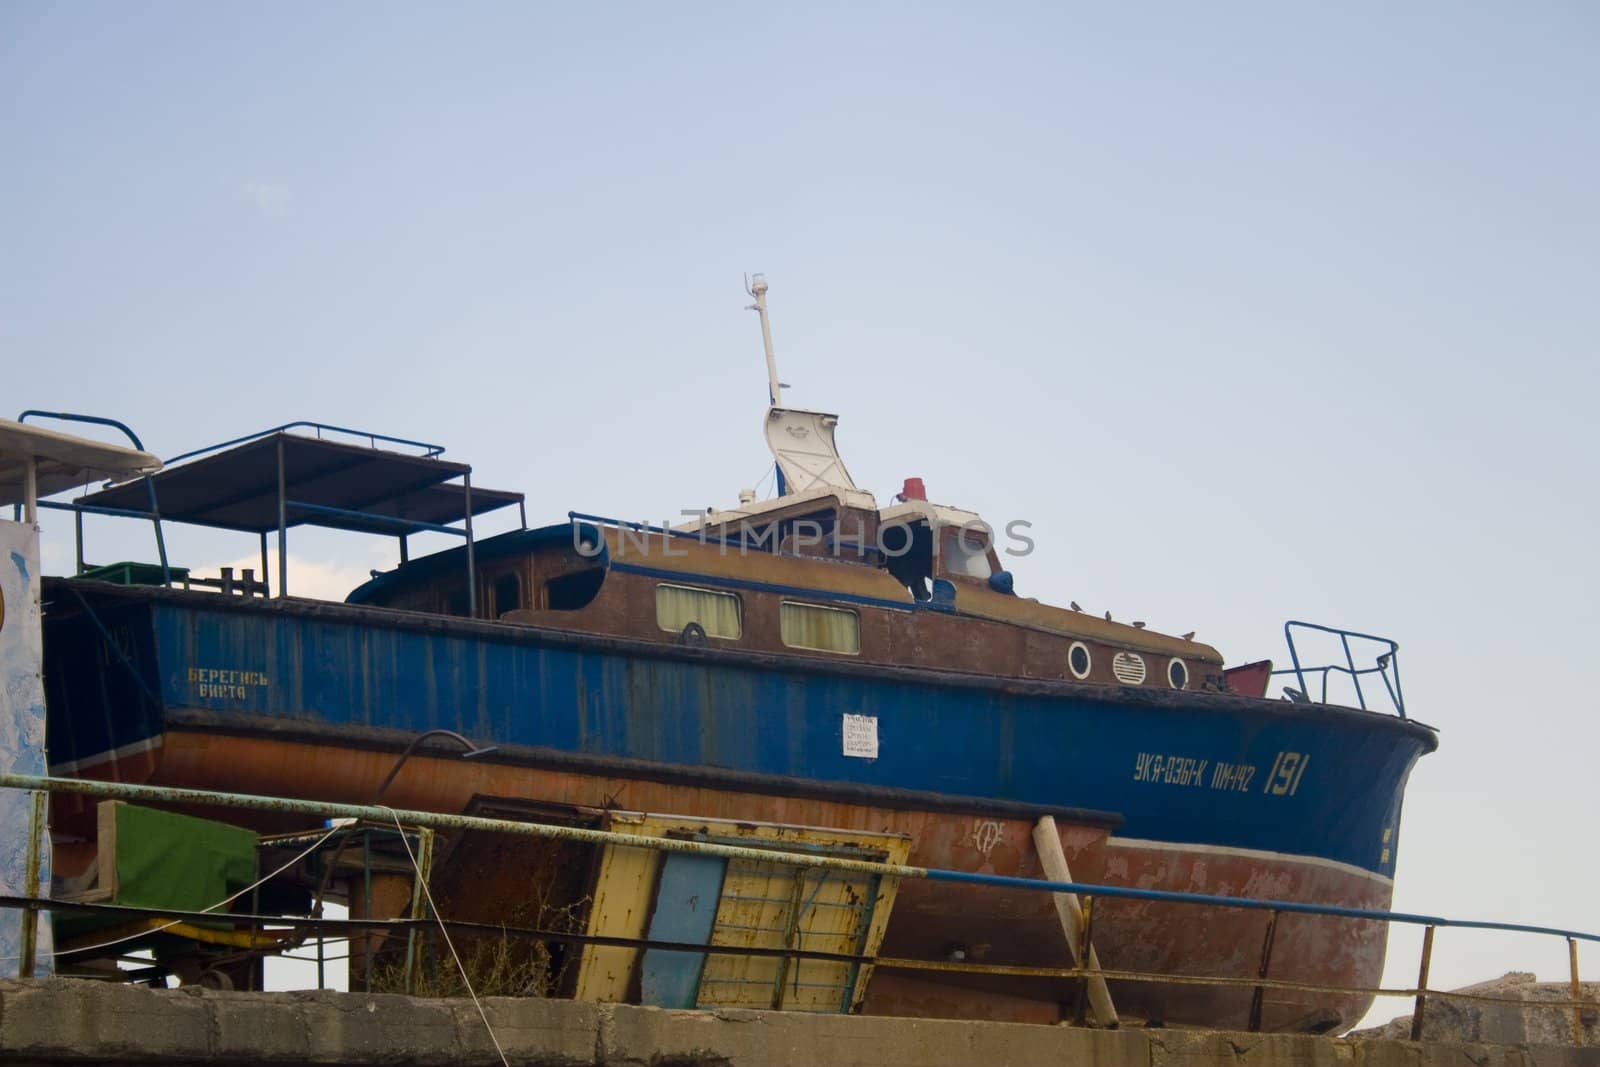 Old rusty fishing vessel sitting on pier